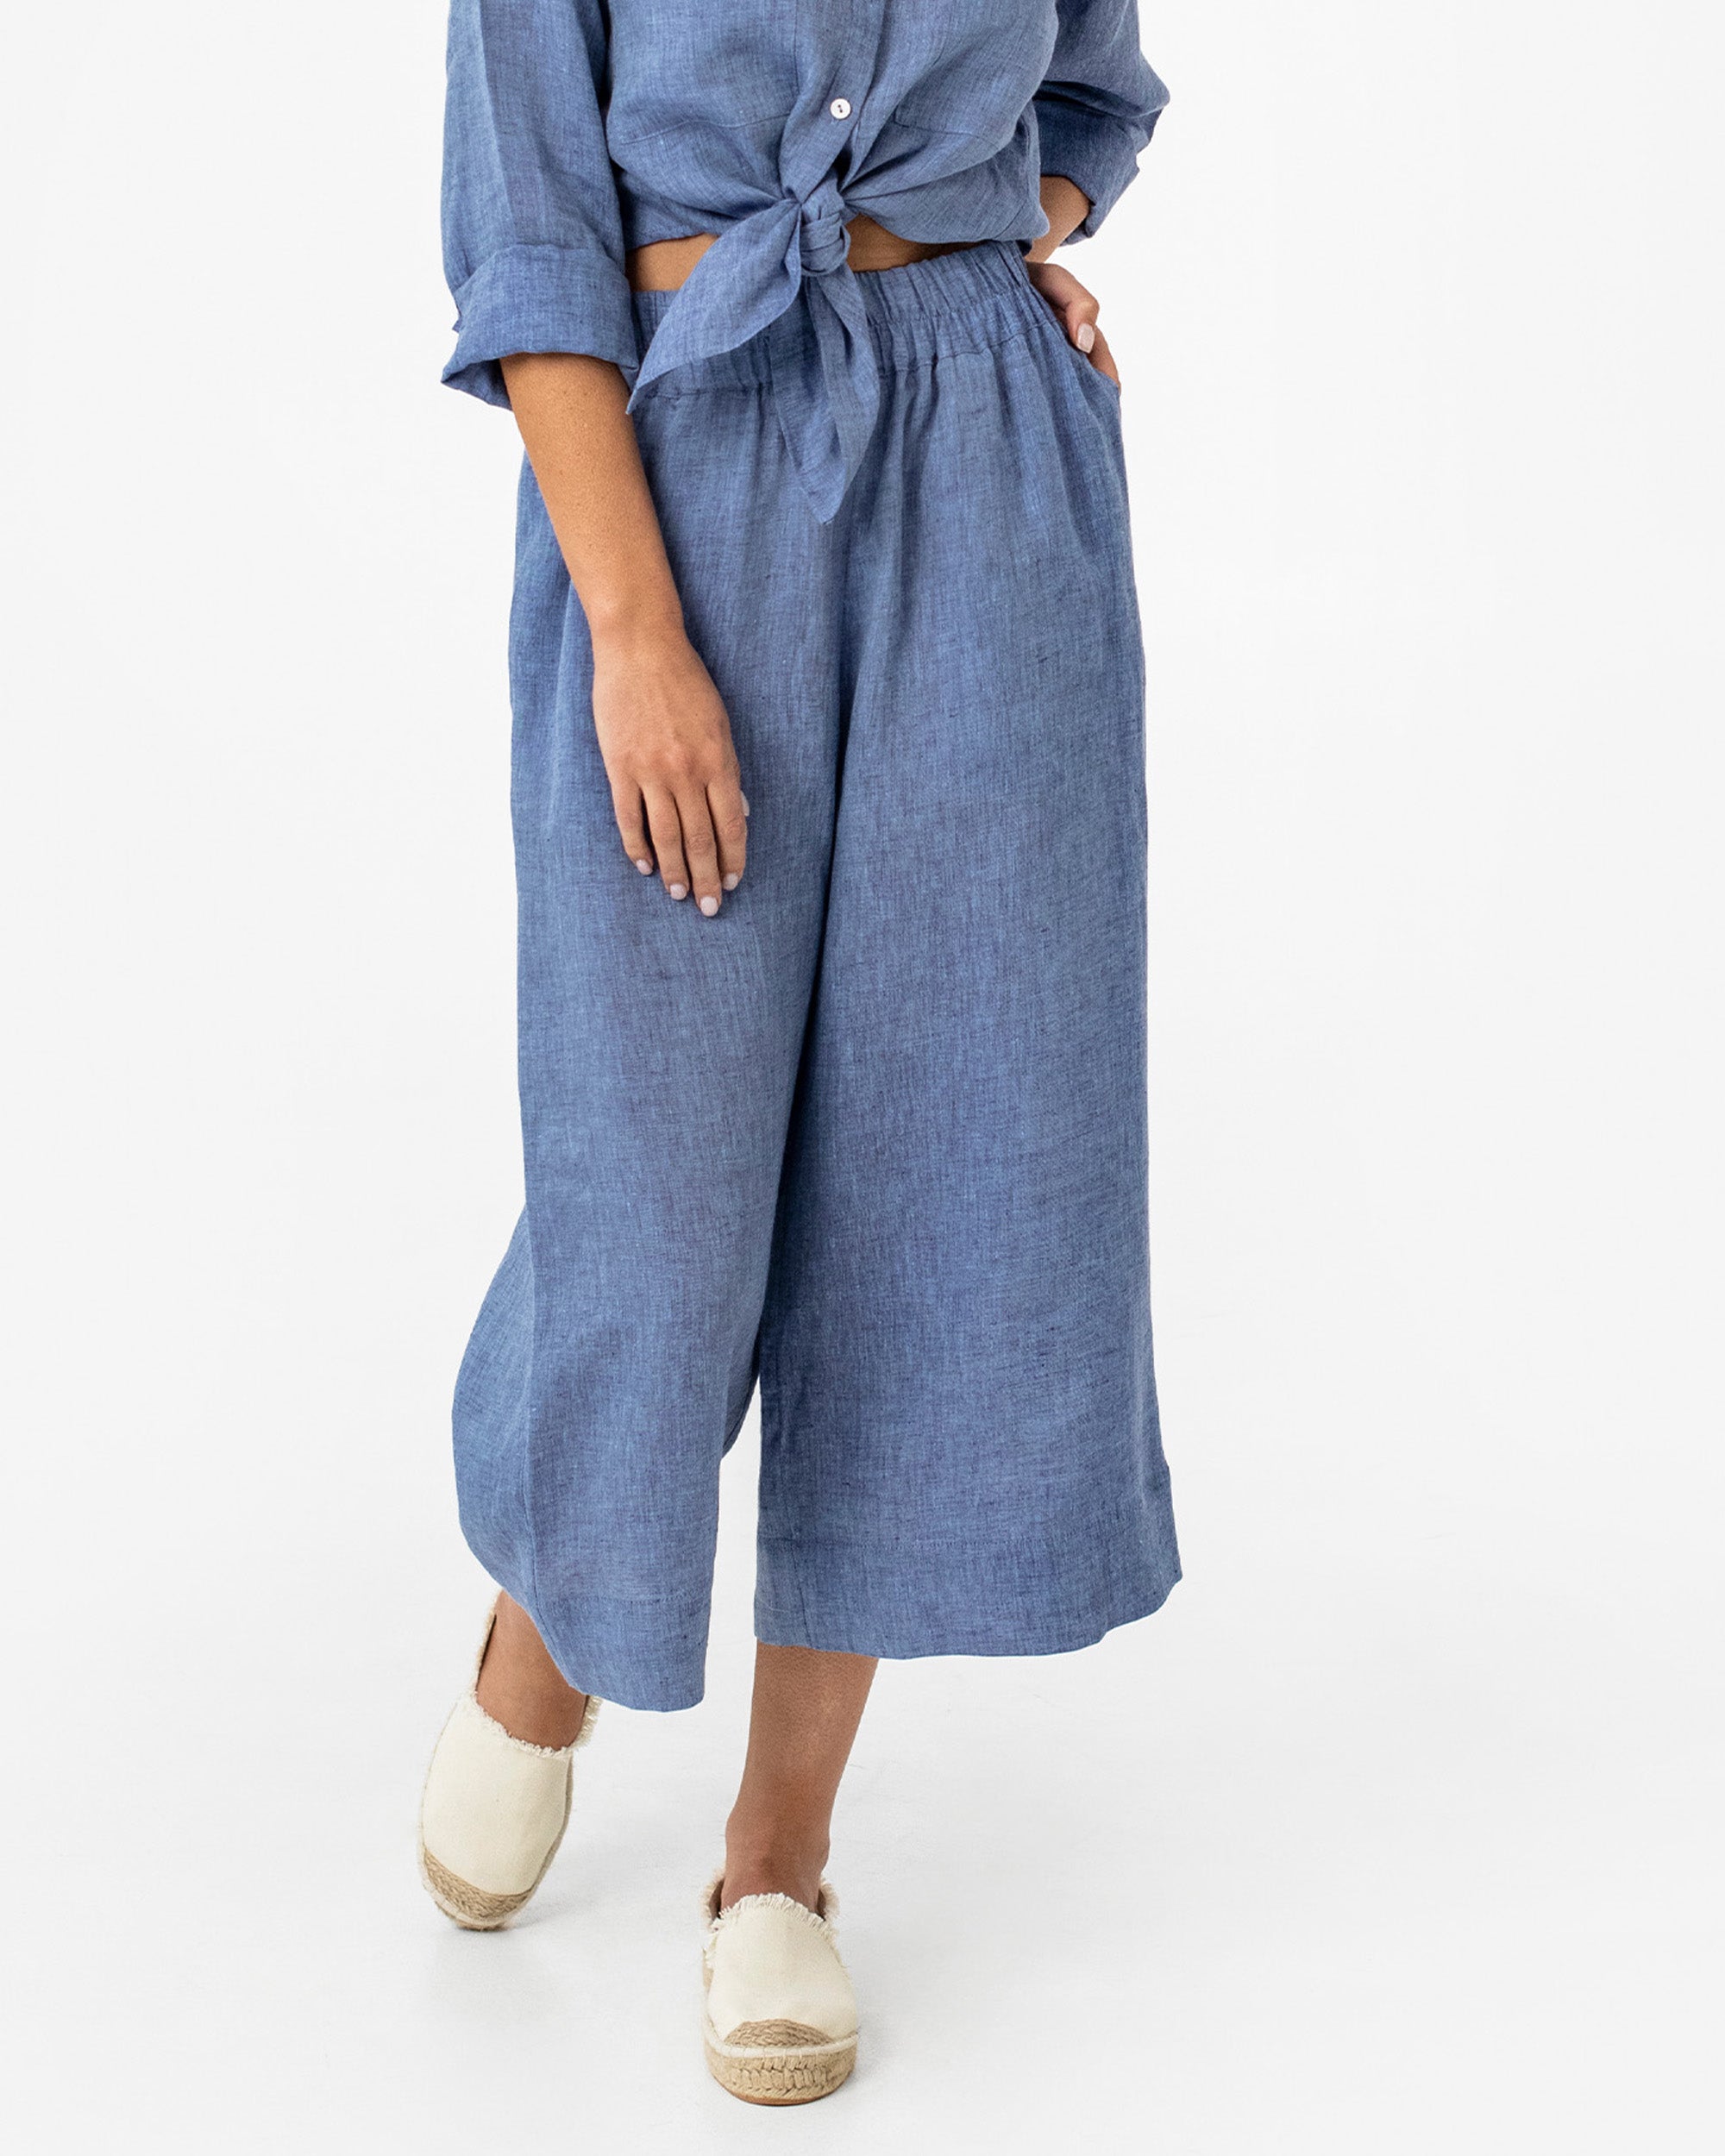 Zara | Pants & Jumpsuits | Zara Z975 Tencel Denim Paper Bag Culottes |  Poshmark